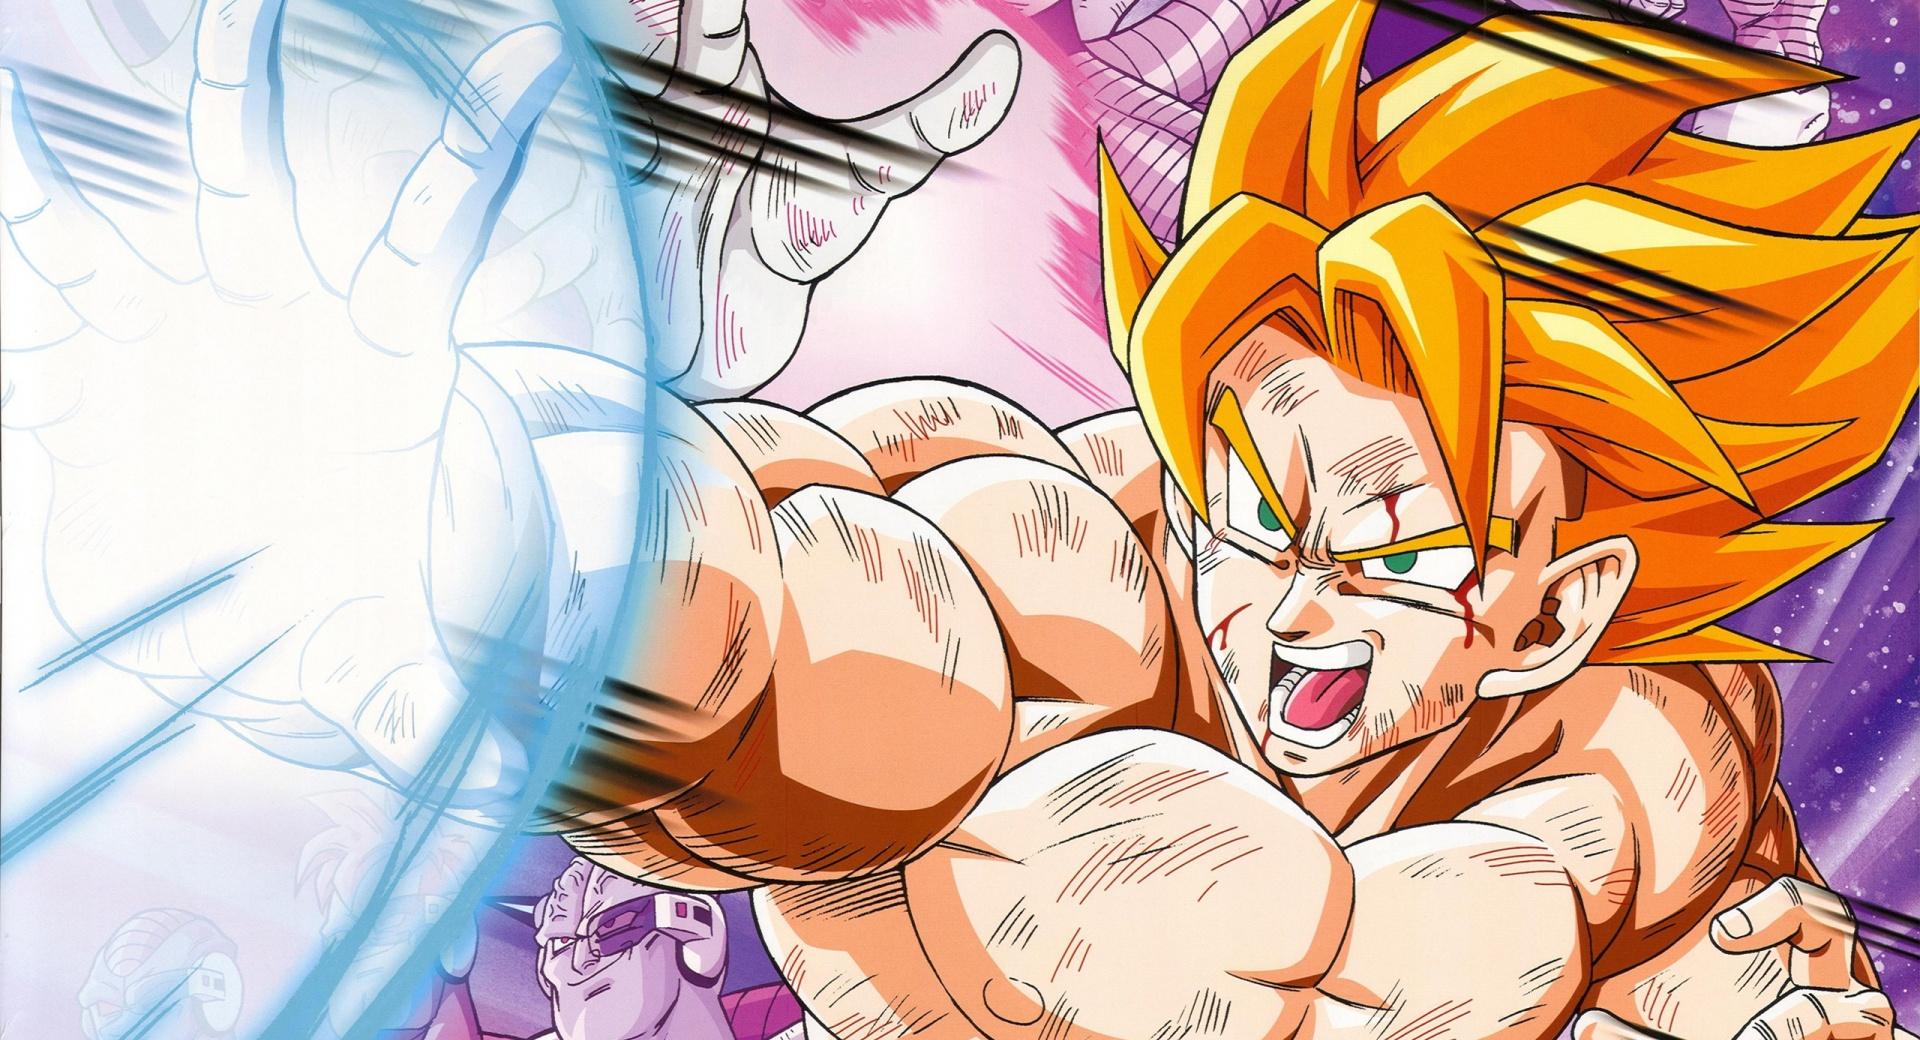 Dragon Ball Z - Super Saiyan Goku at 1024 x 1024 iPad size wallpapers HD quality